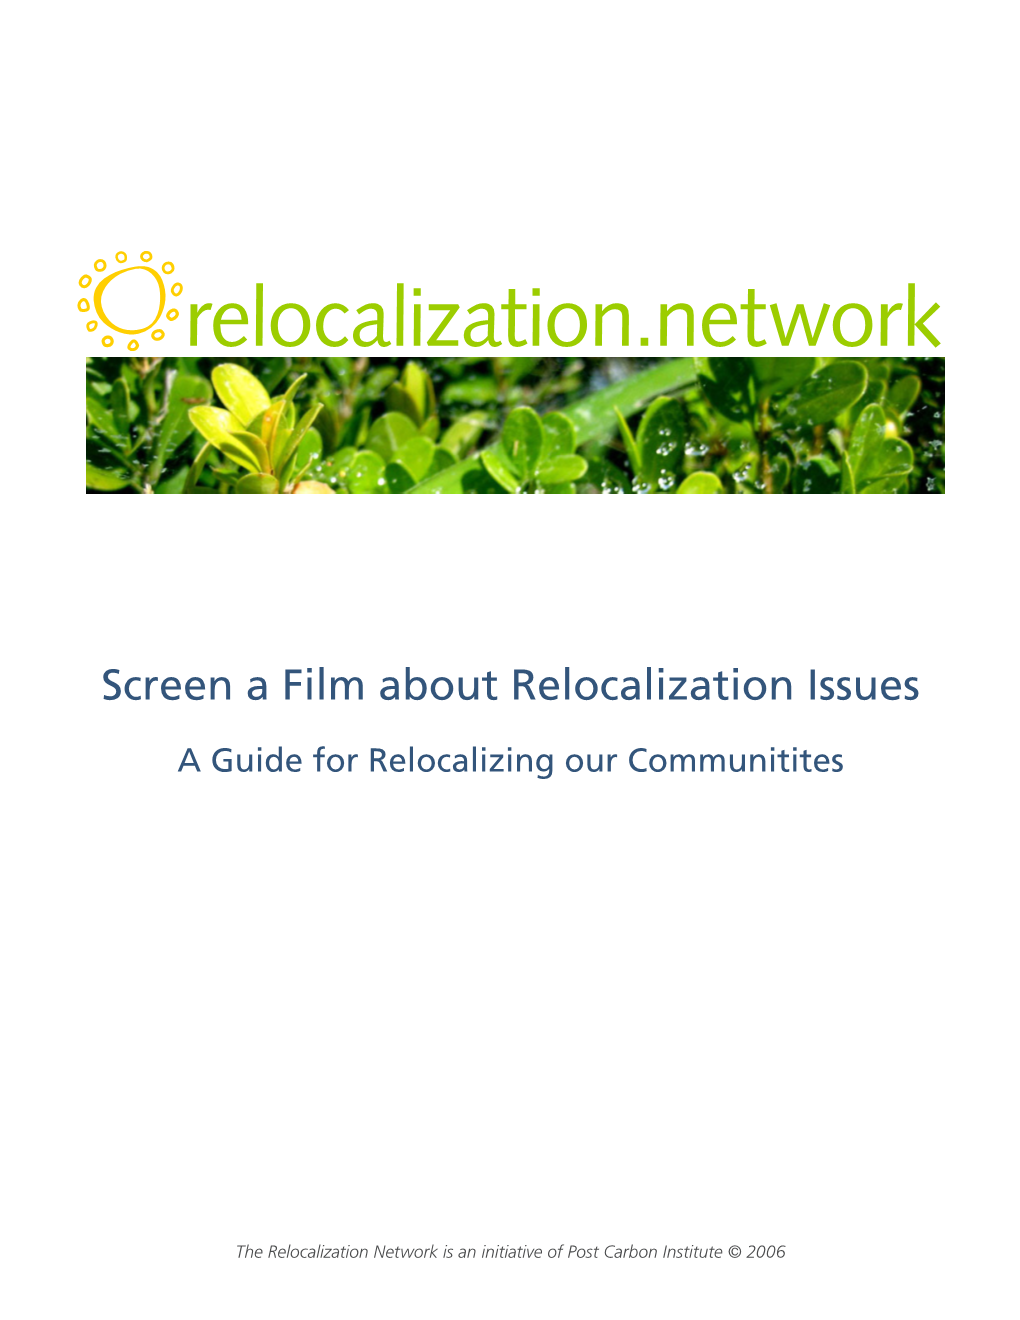 Relocalization.Network